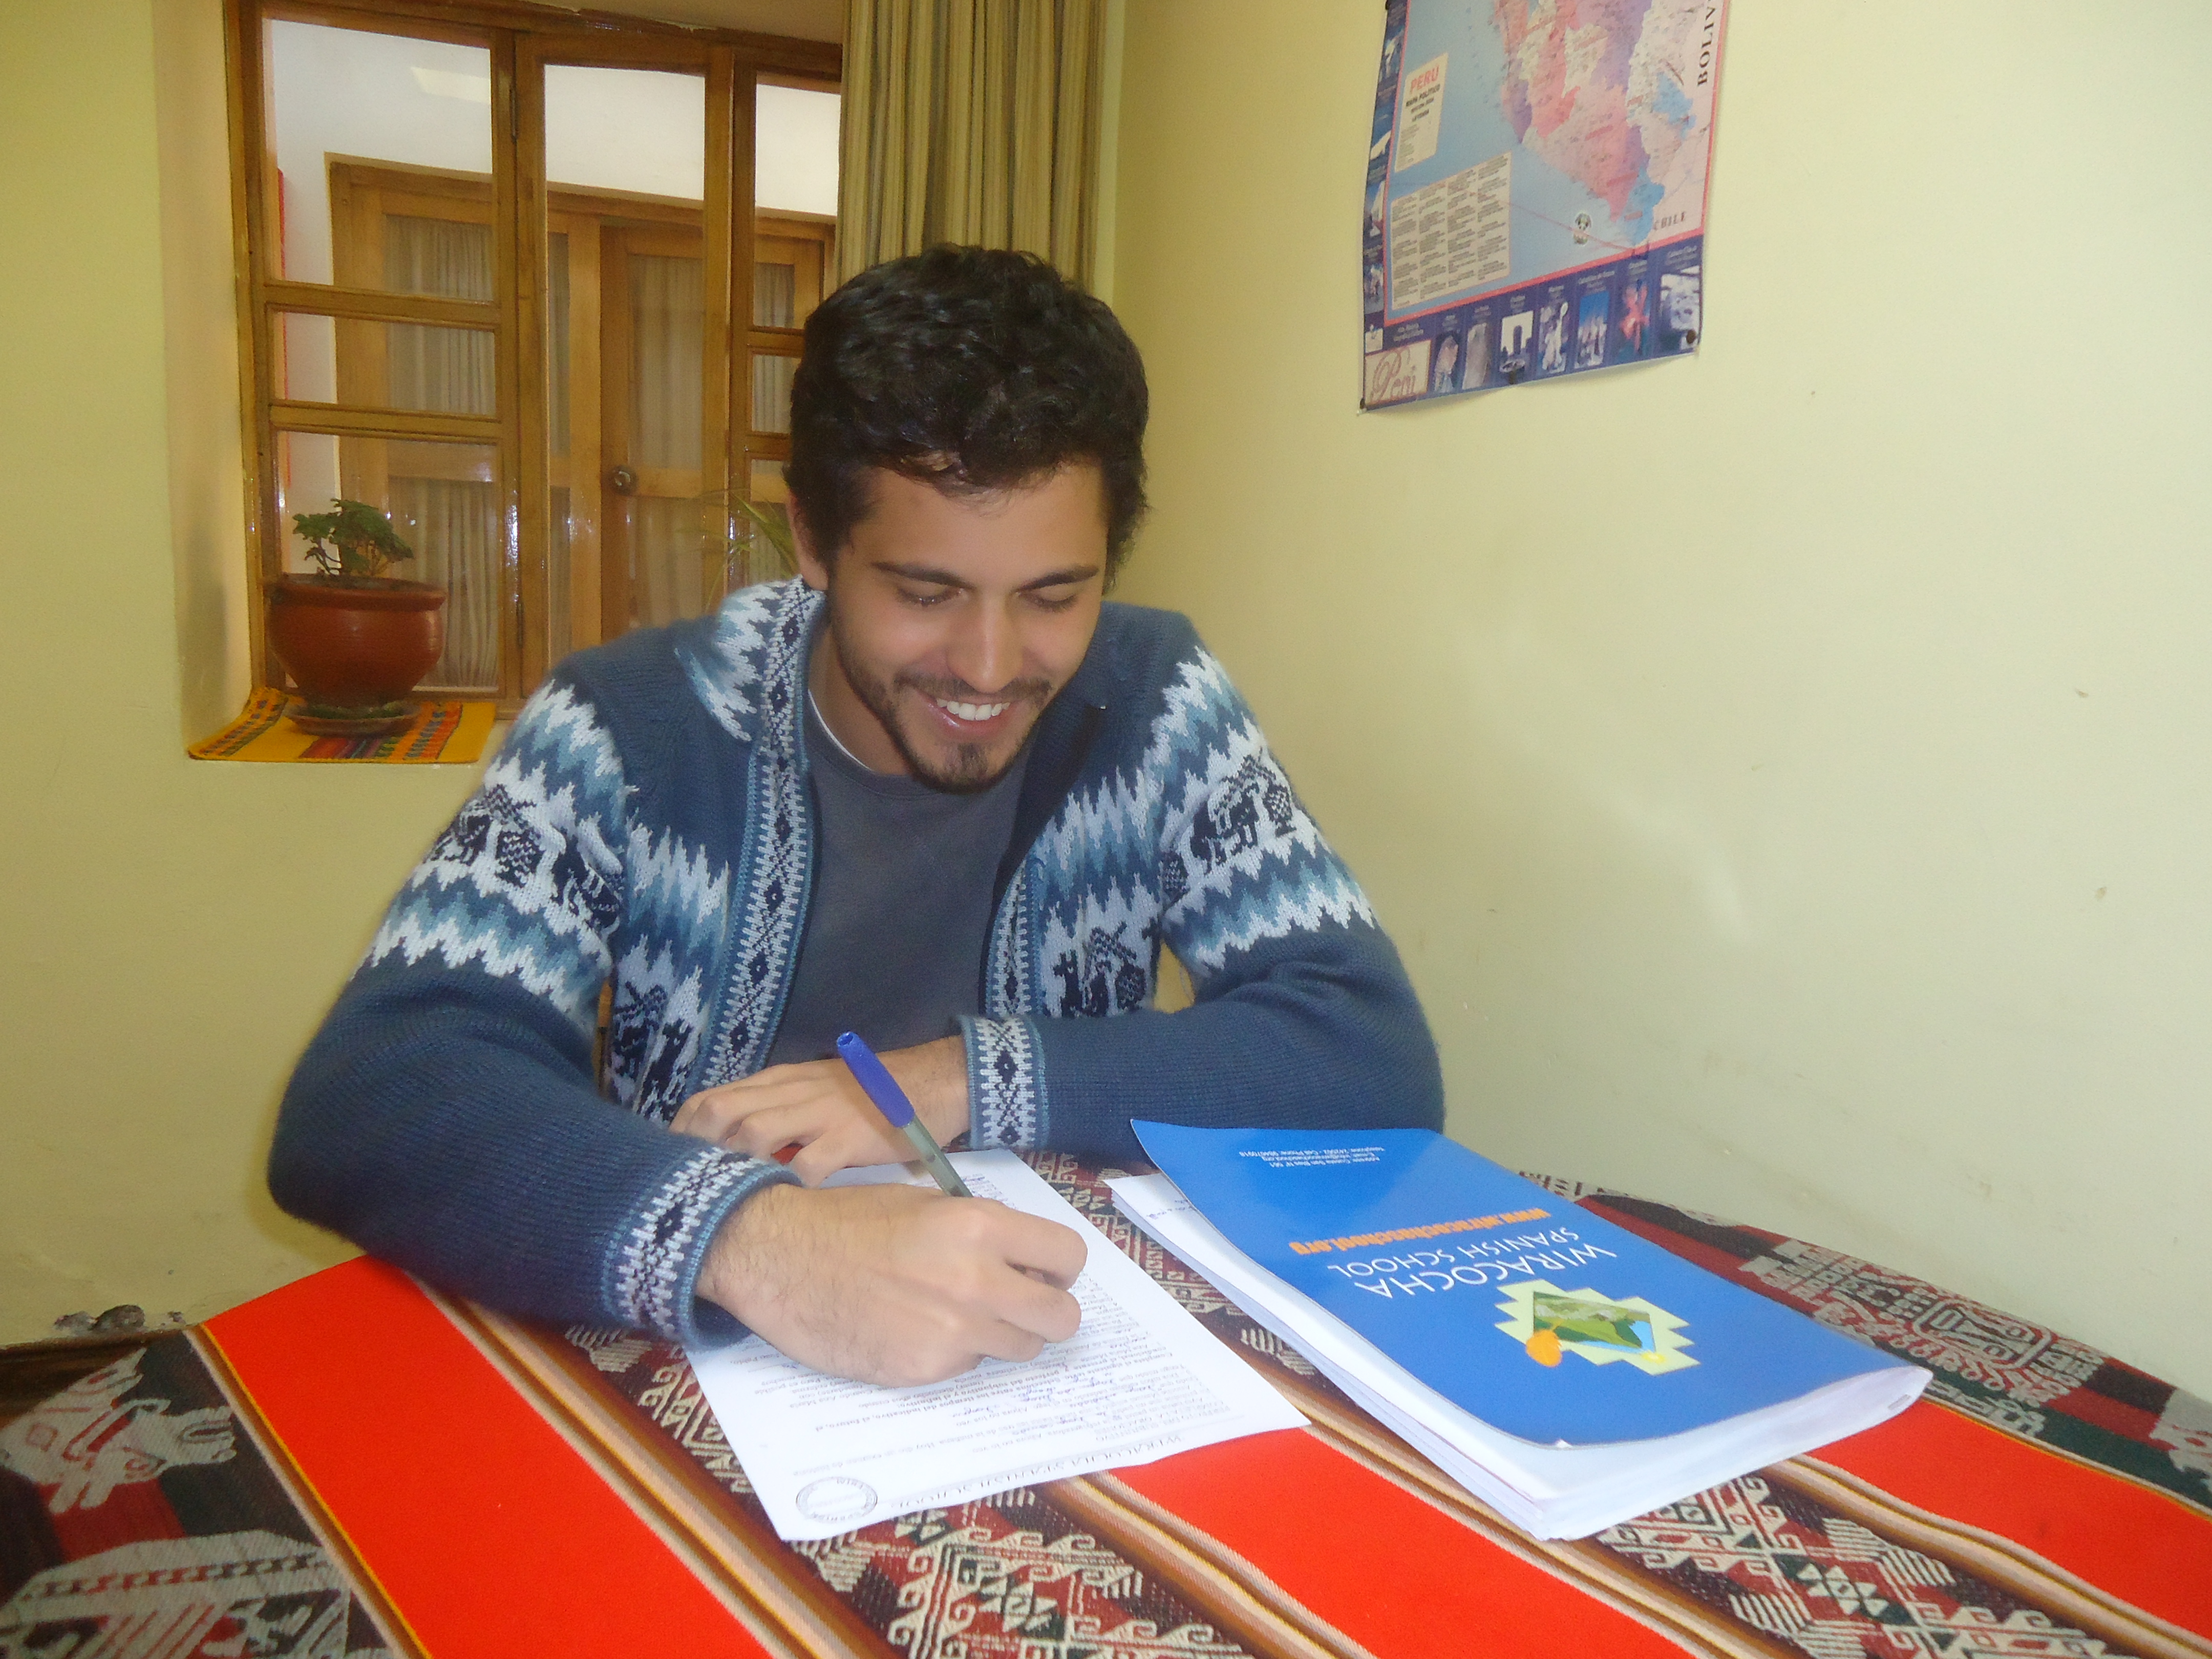 Learn Spanish in Cusco, Peru at Wiracocha Spanish School